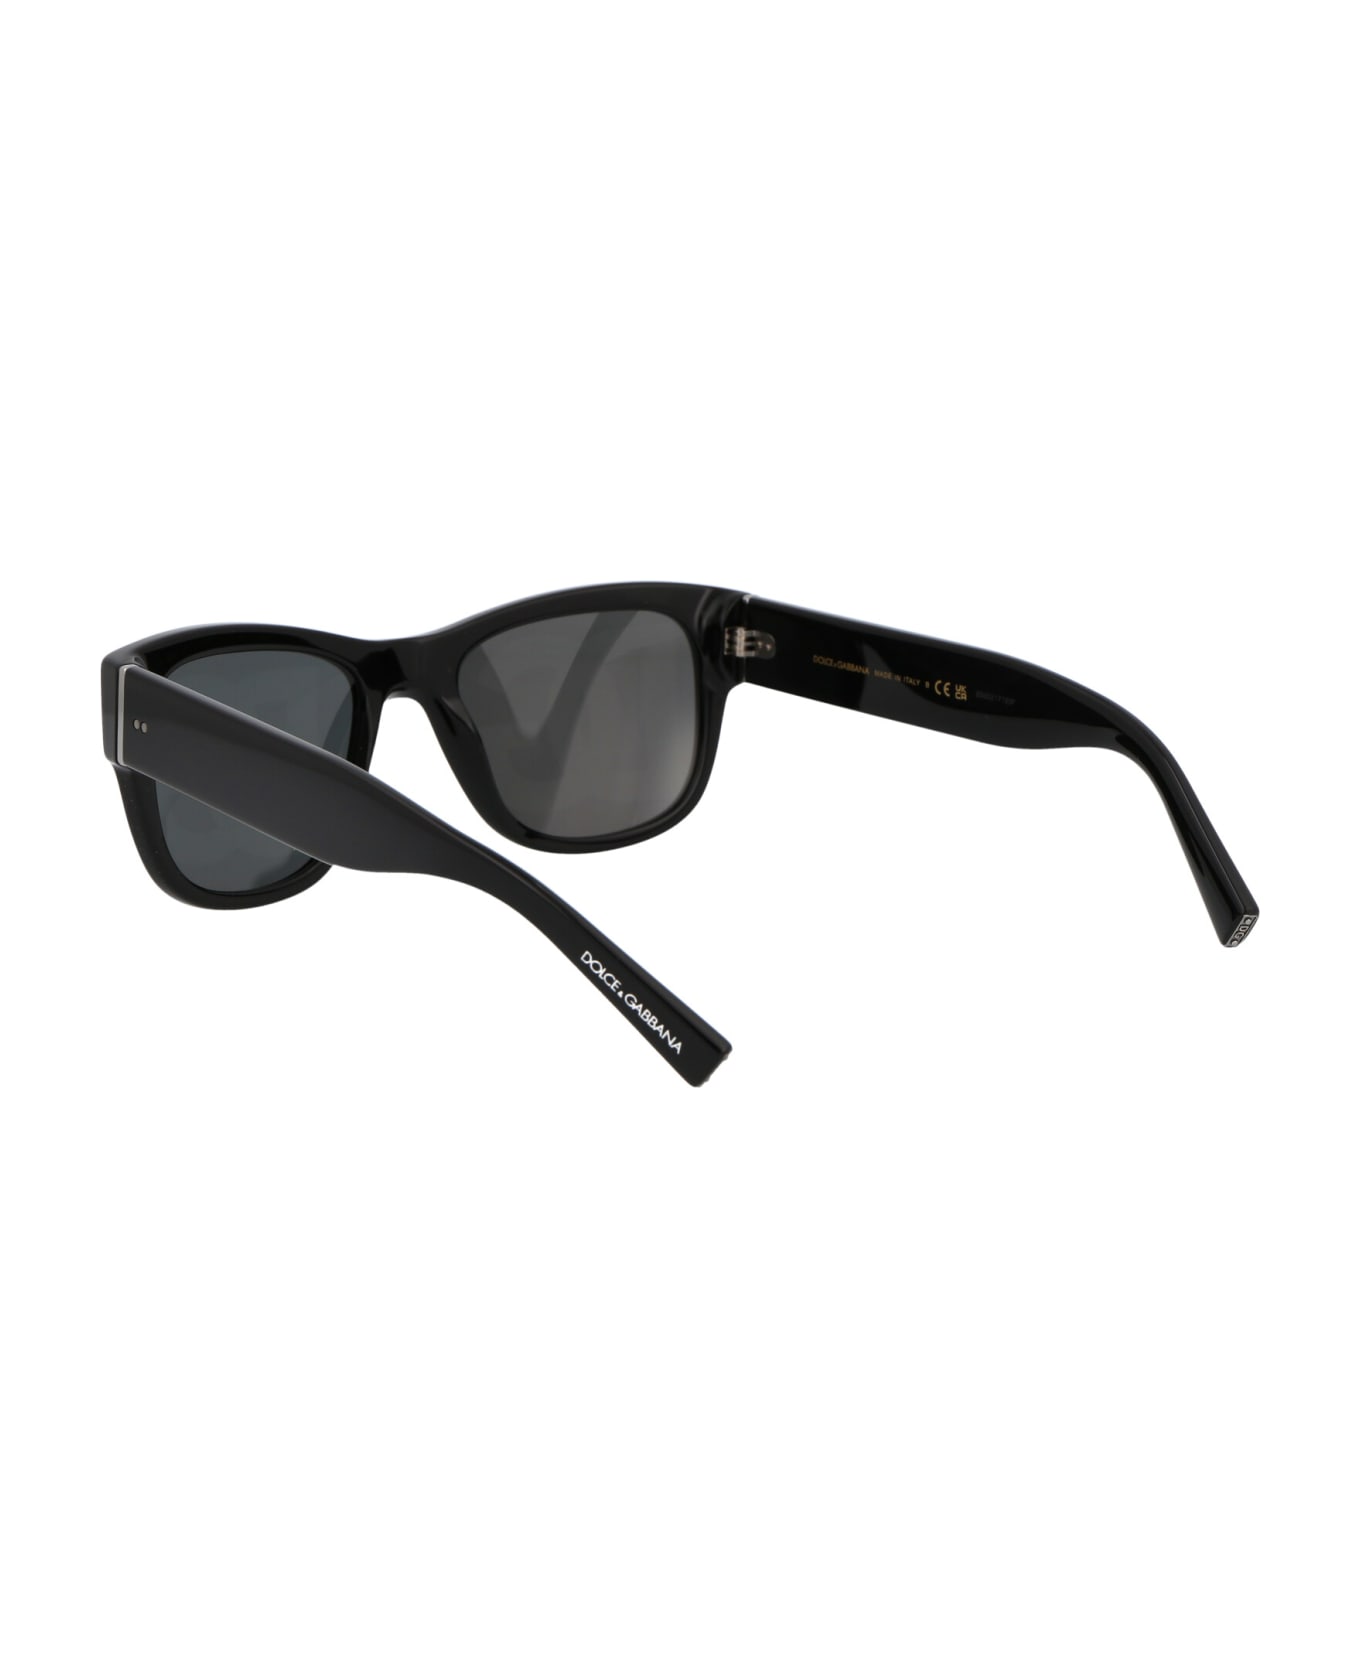 Dolce & Gabbana Eyewear 0dg4338 Sunglasses - 501/M BLACK